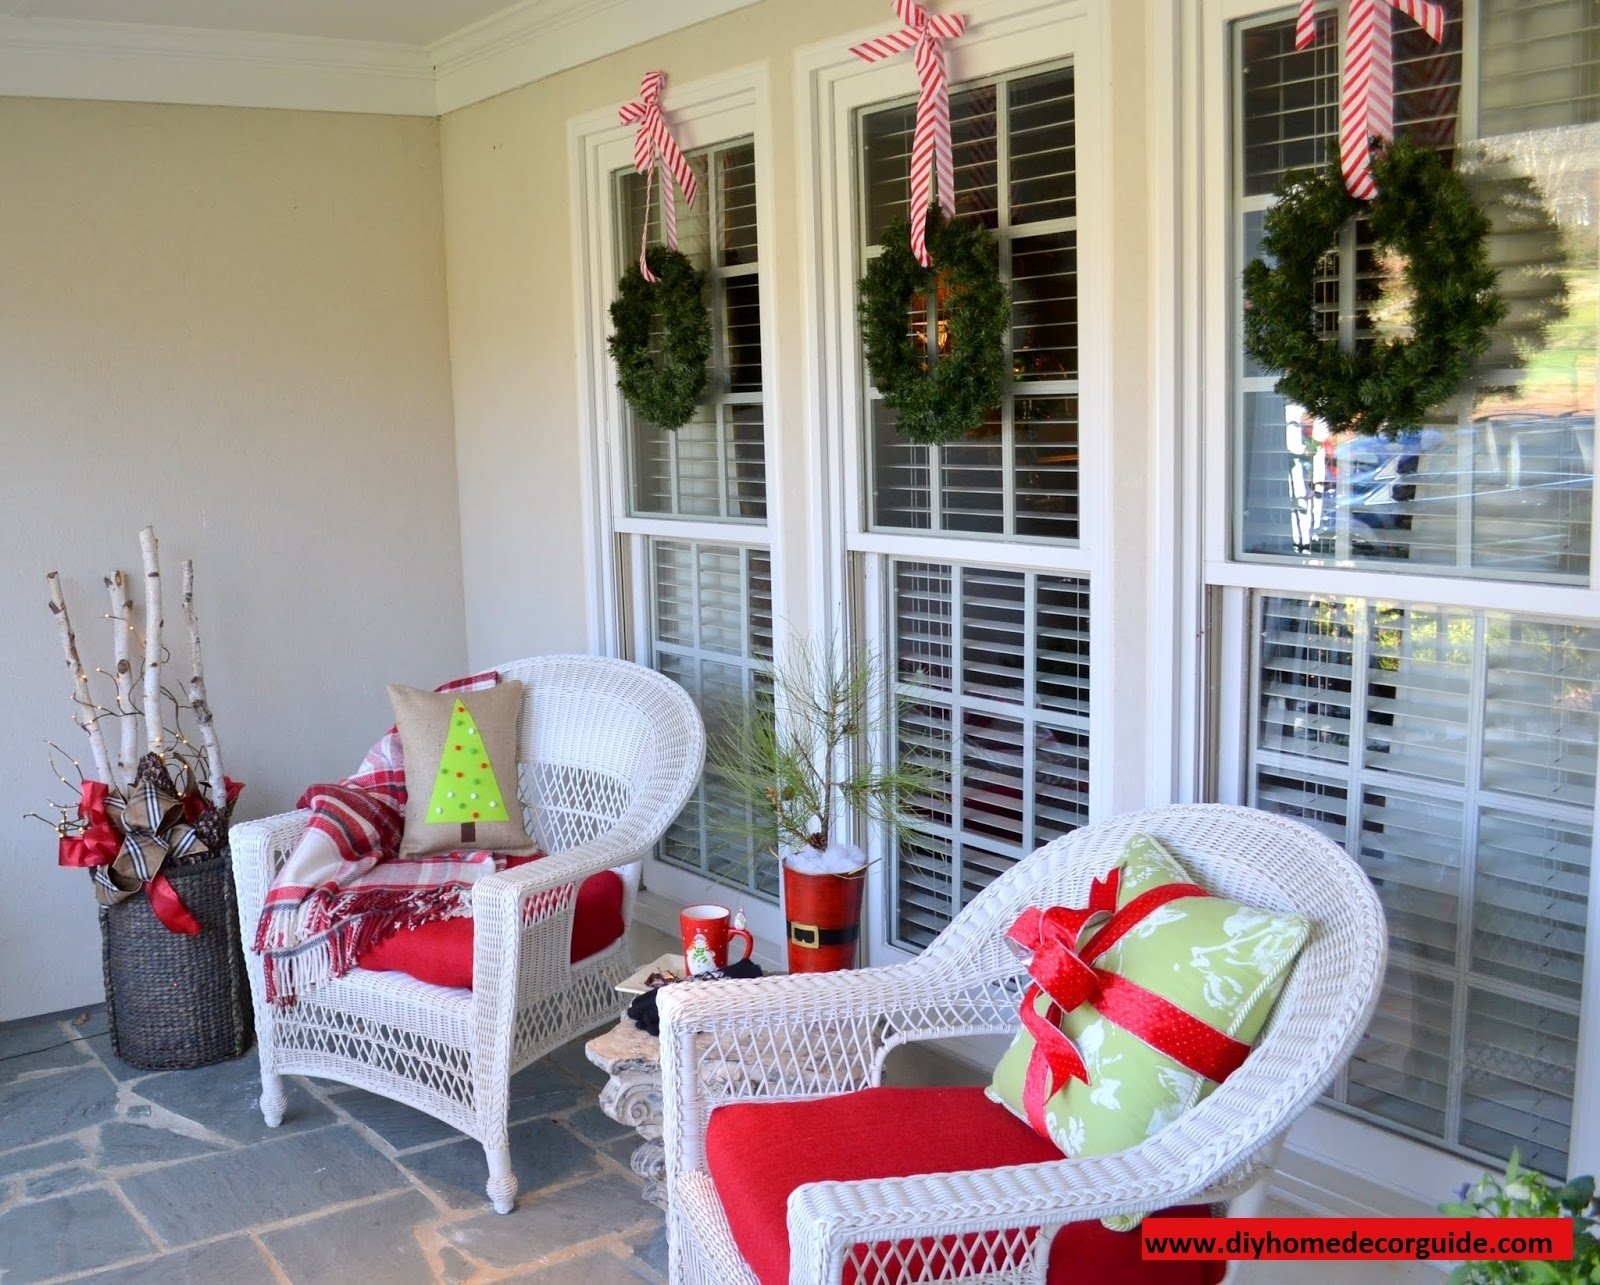 10 Fantastic Homemade Outdoor Christmas Decorations Ideas diy outdoor christmas decorations ideas dma homes 19790 1 2022